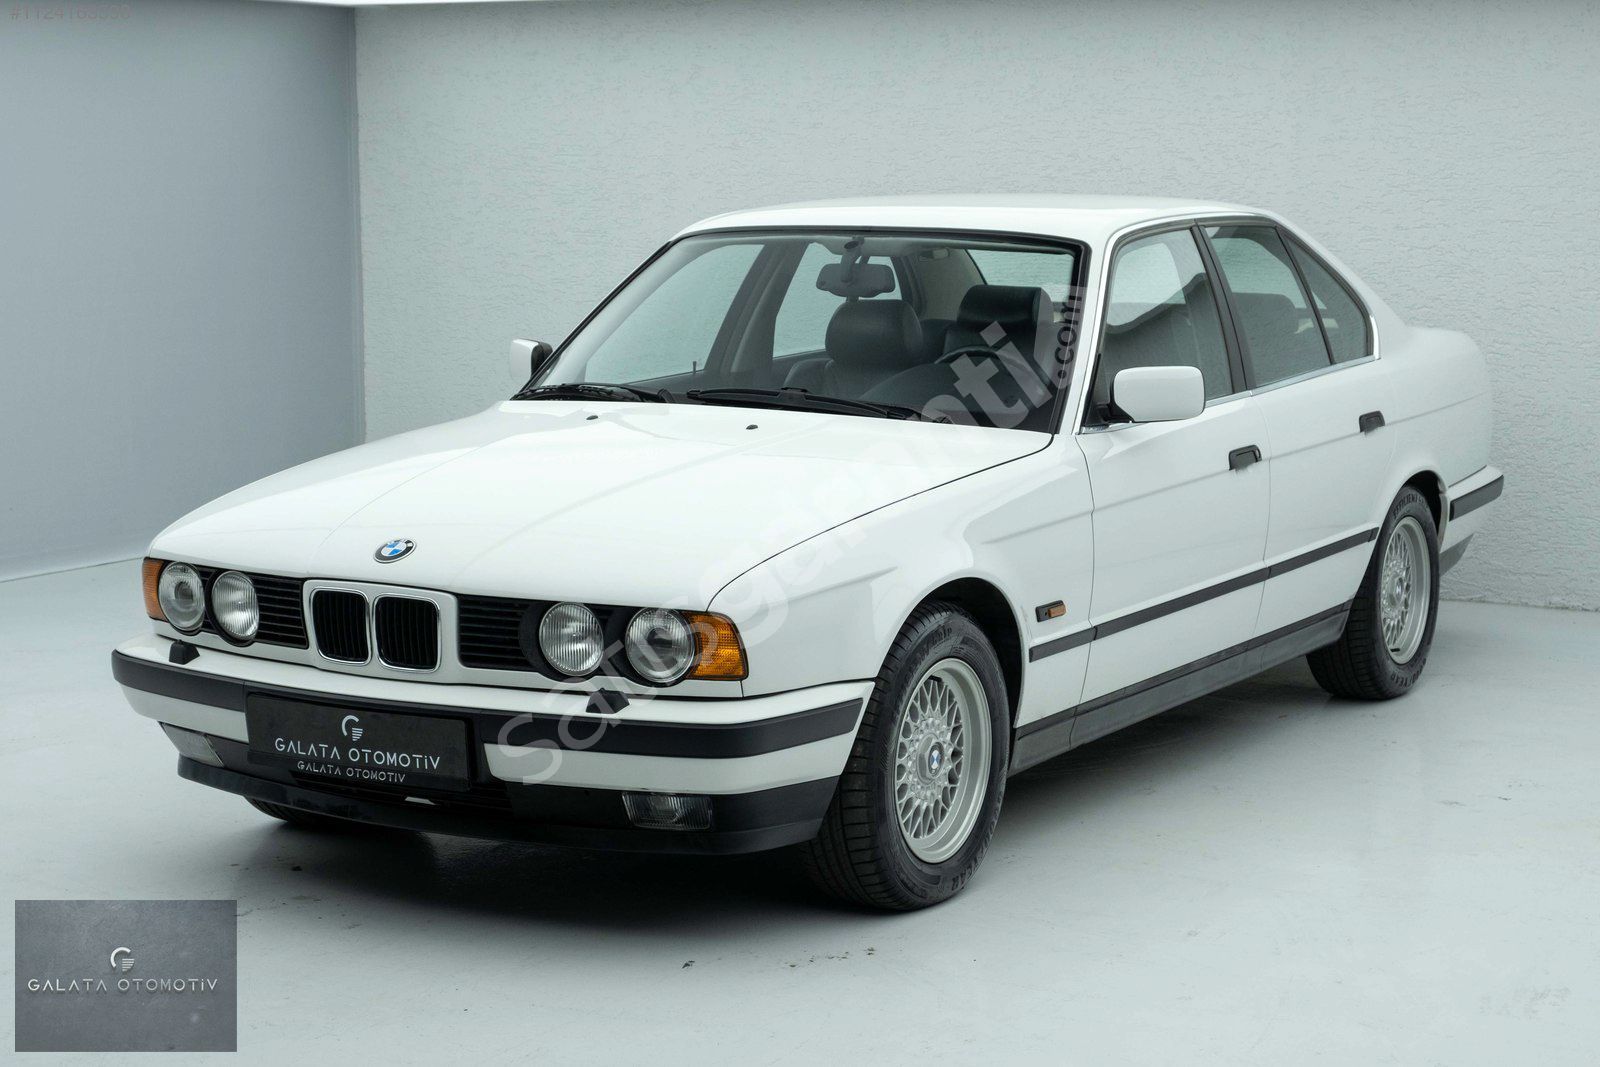 'GALATA' 1994 BMW 520i OTOMATIK